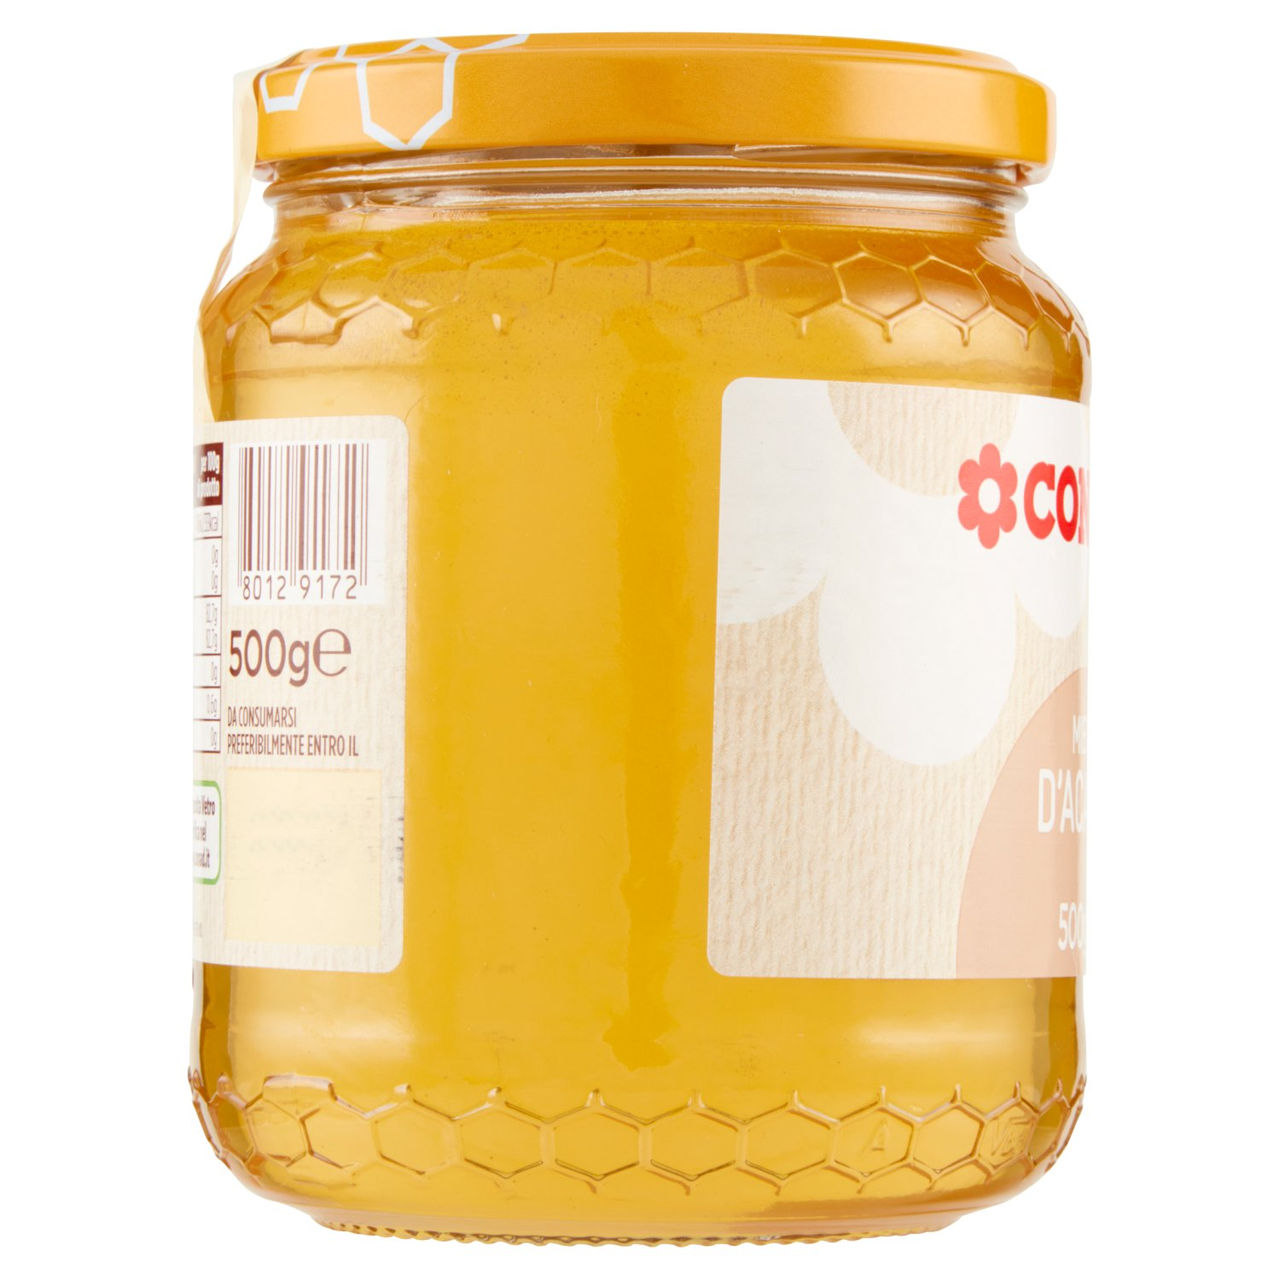 Miele d'Acacia 500 g Conad in vendita online